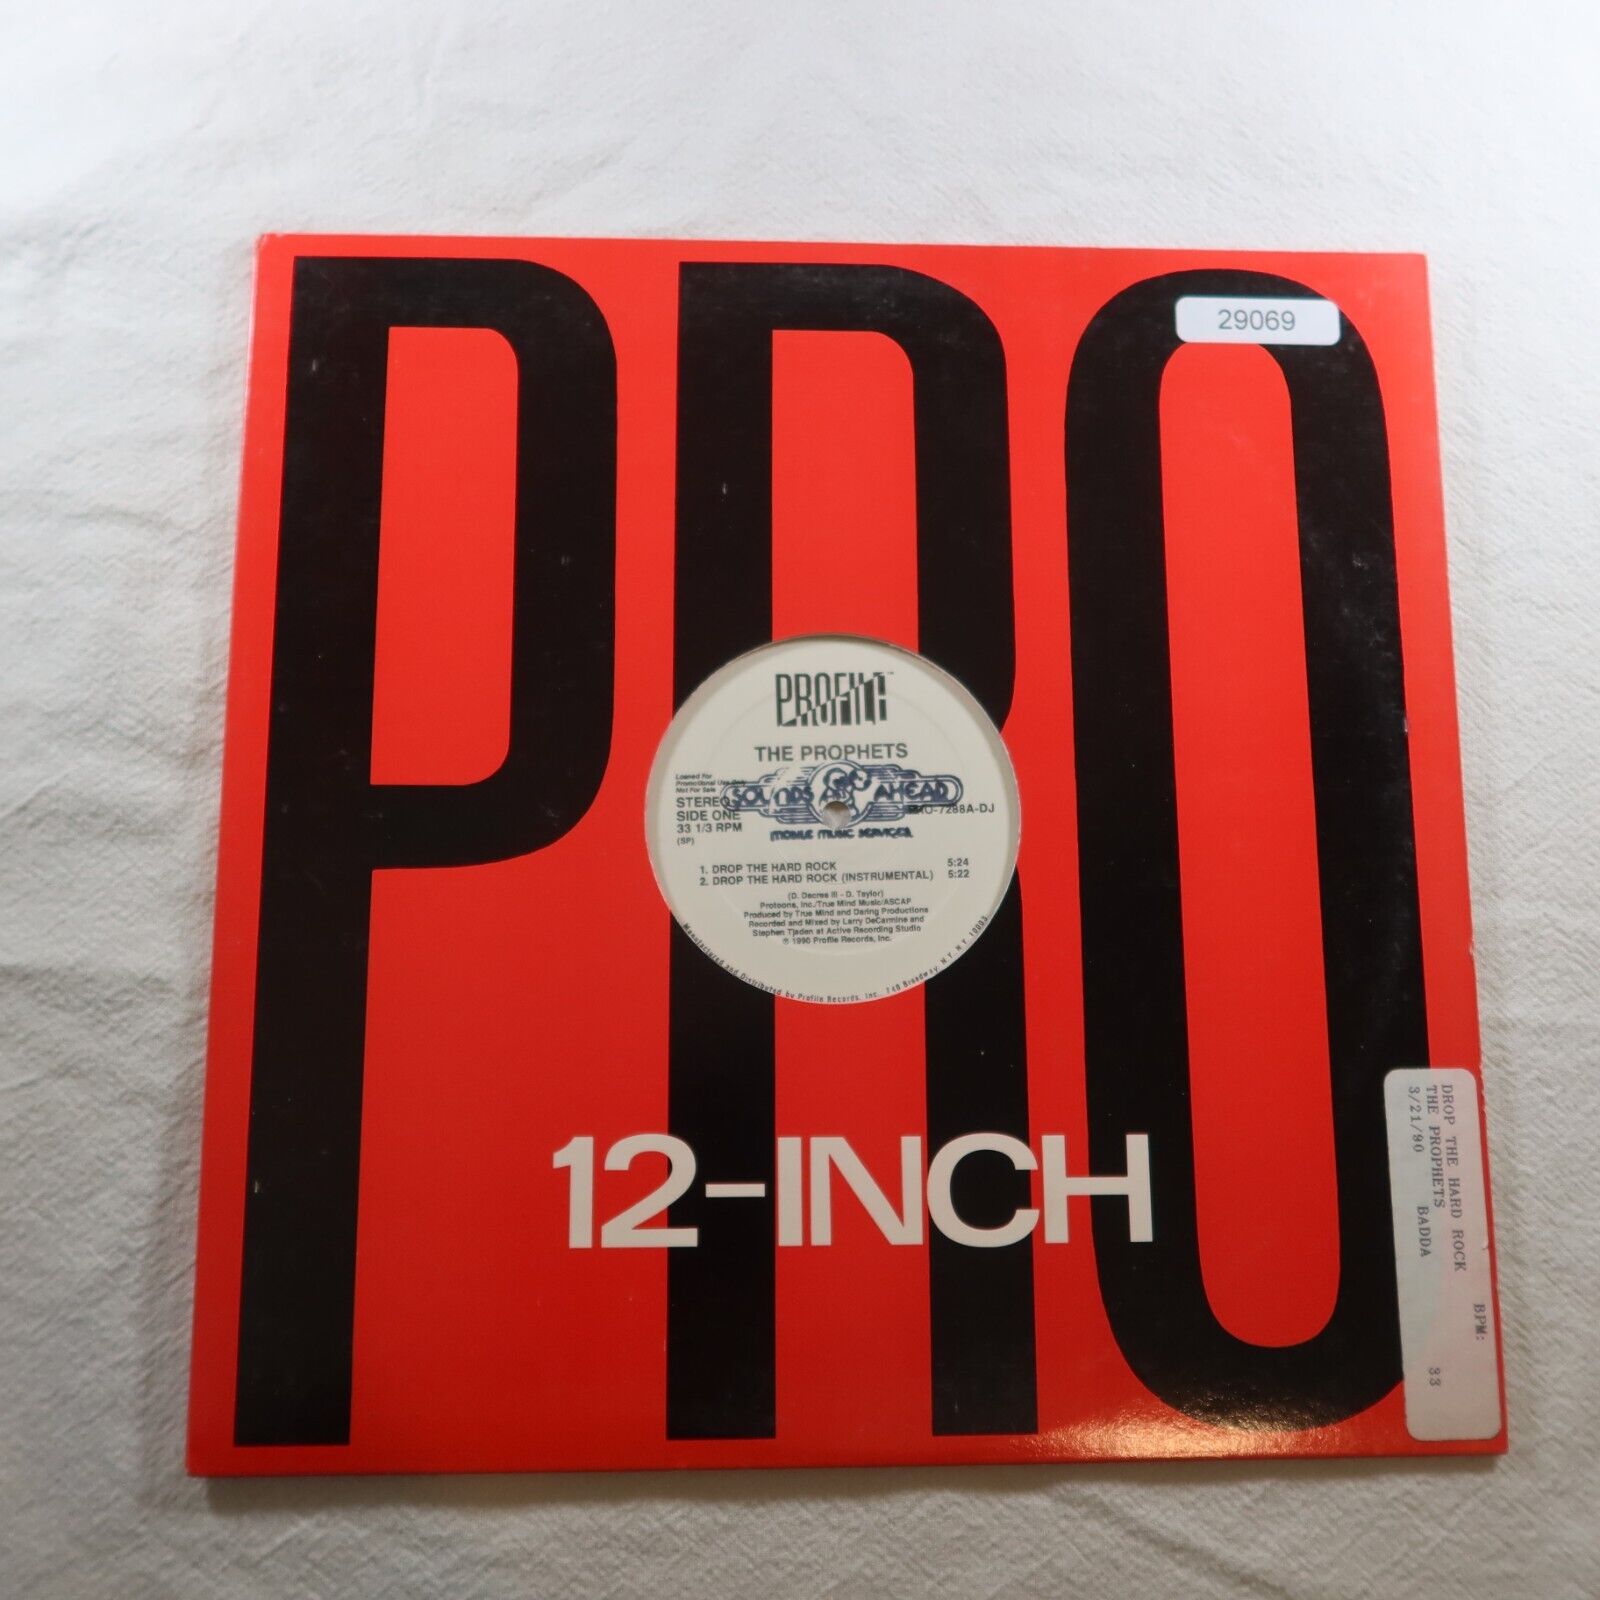 The Prophets Drop The Hard Rock PROMO SINGLE Vinyl Record Album